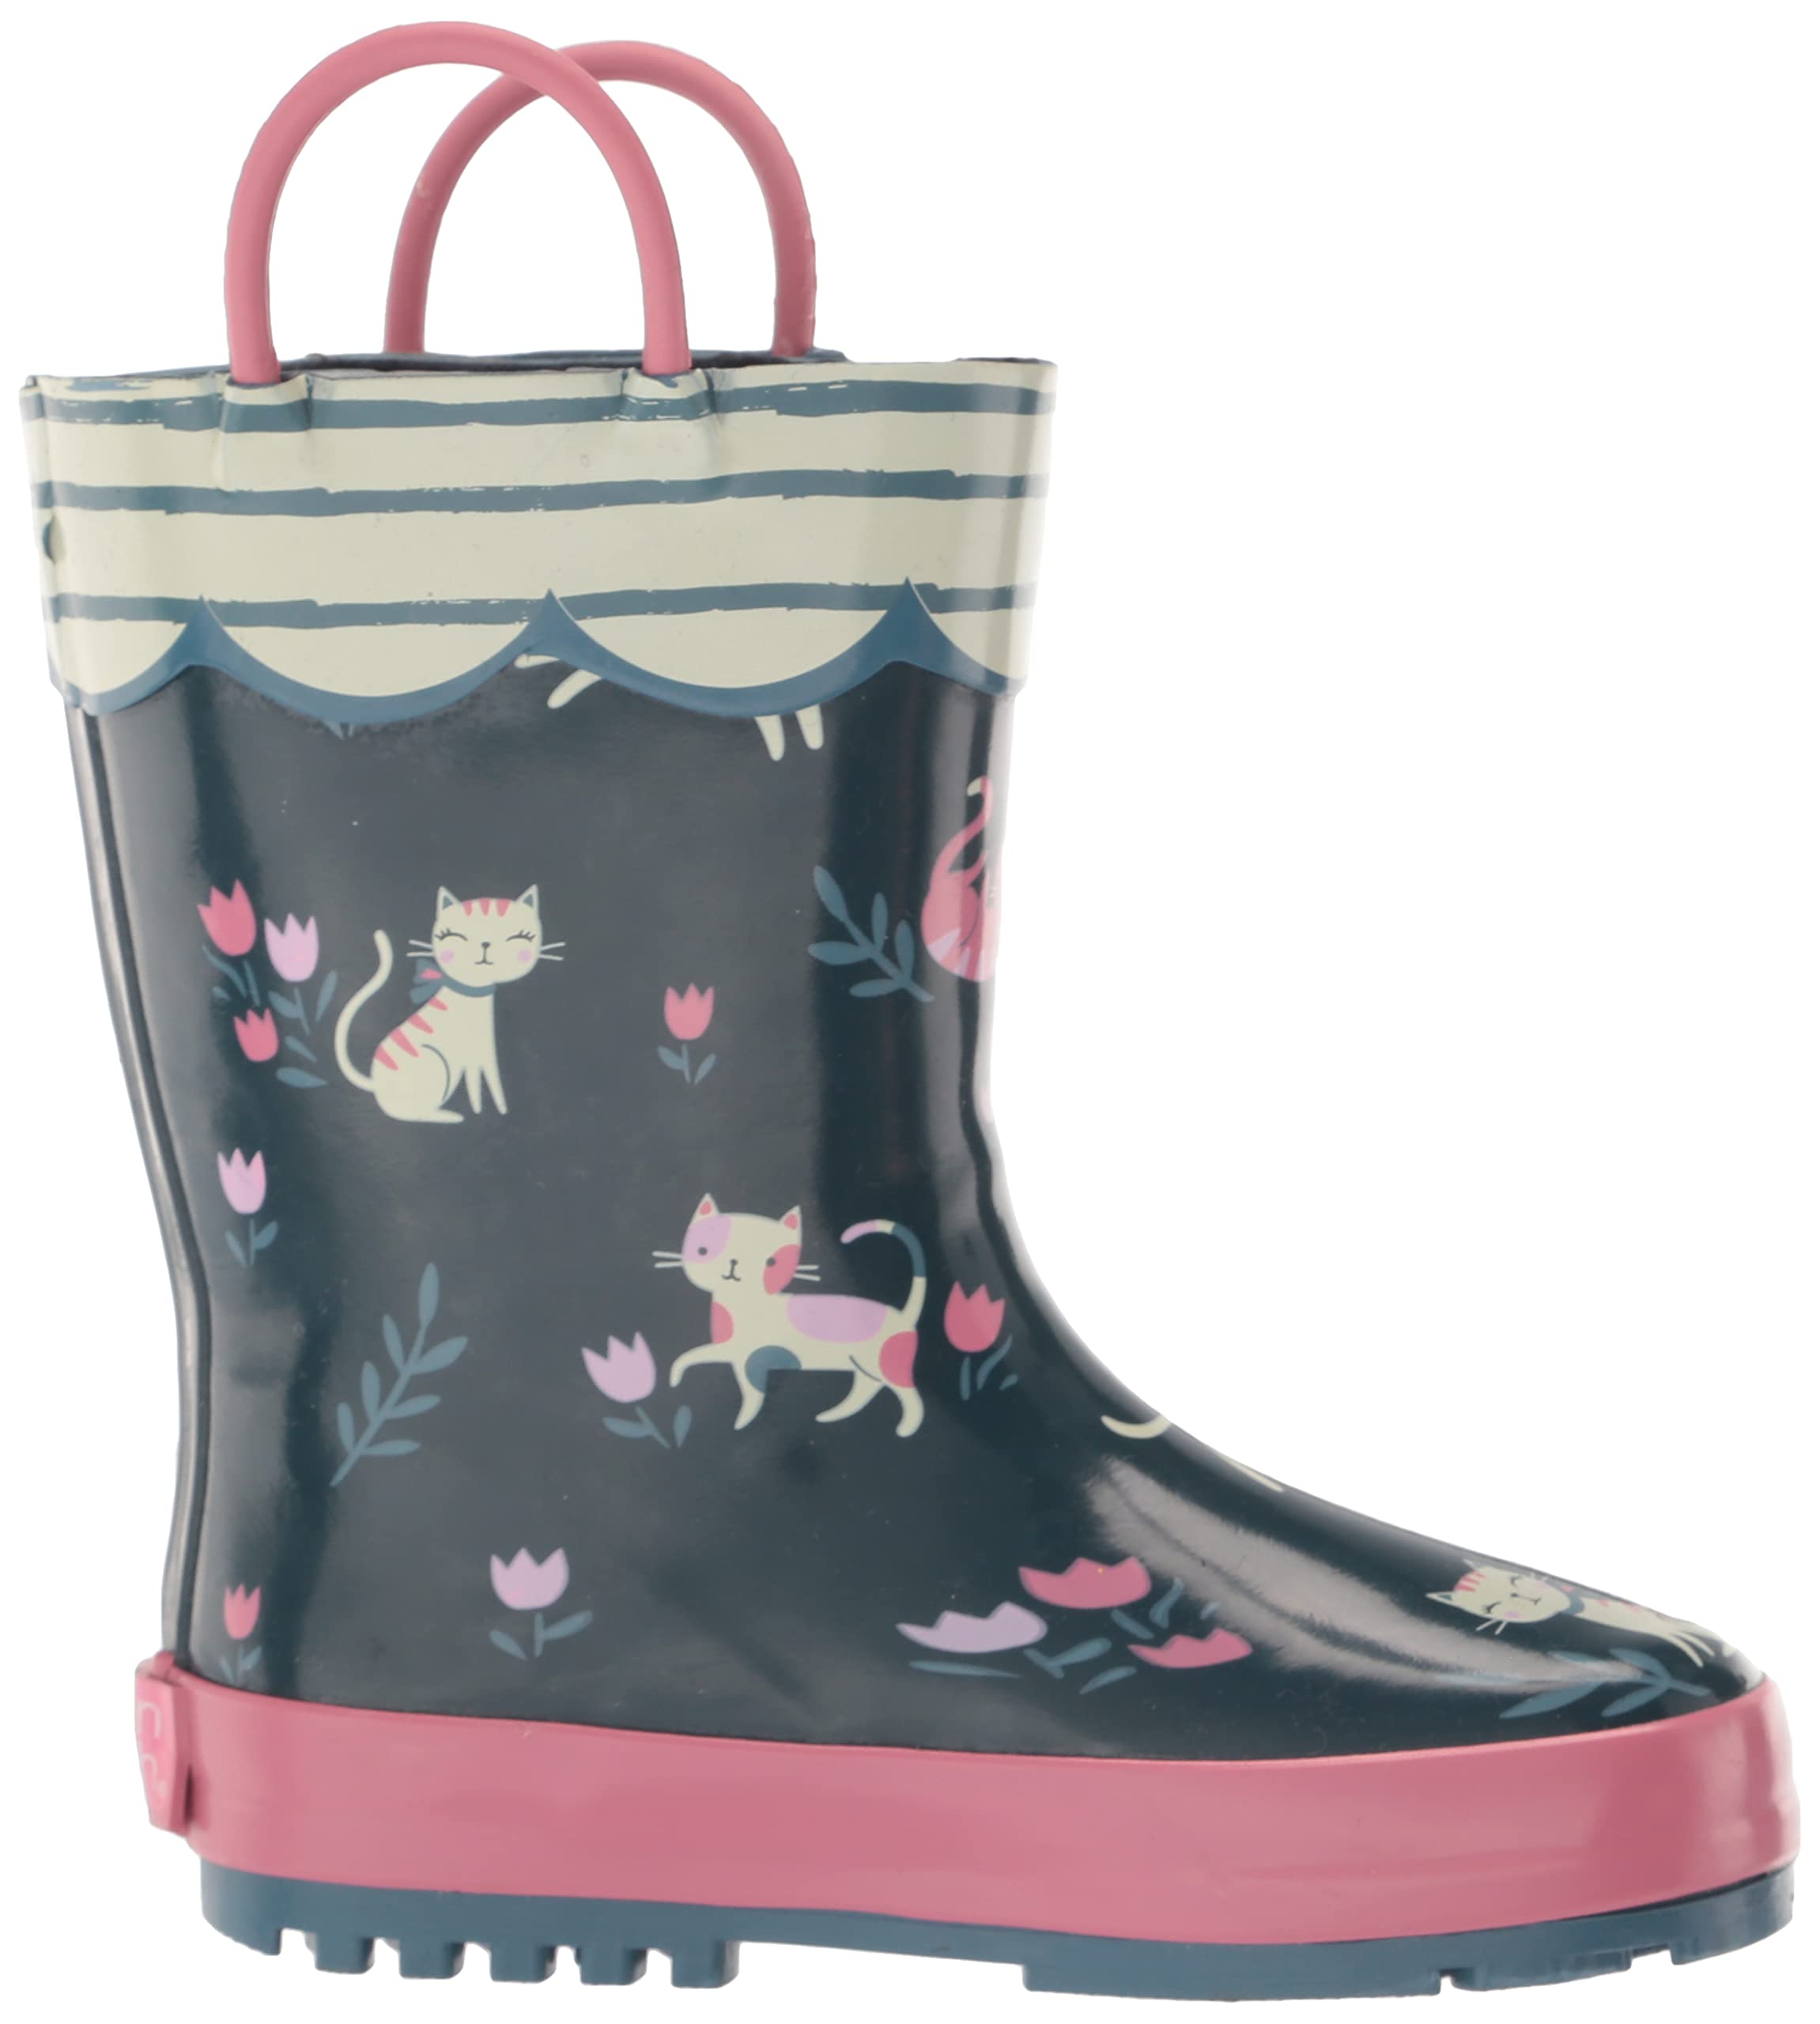 Stephen Joseph Girl's Cats Rain Shoe